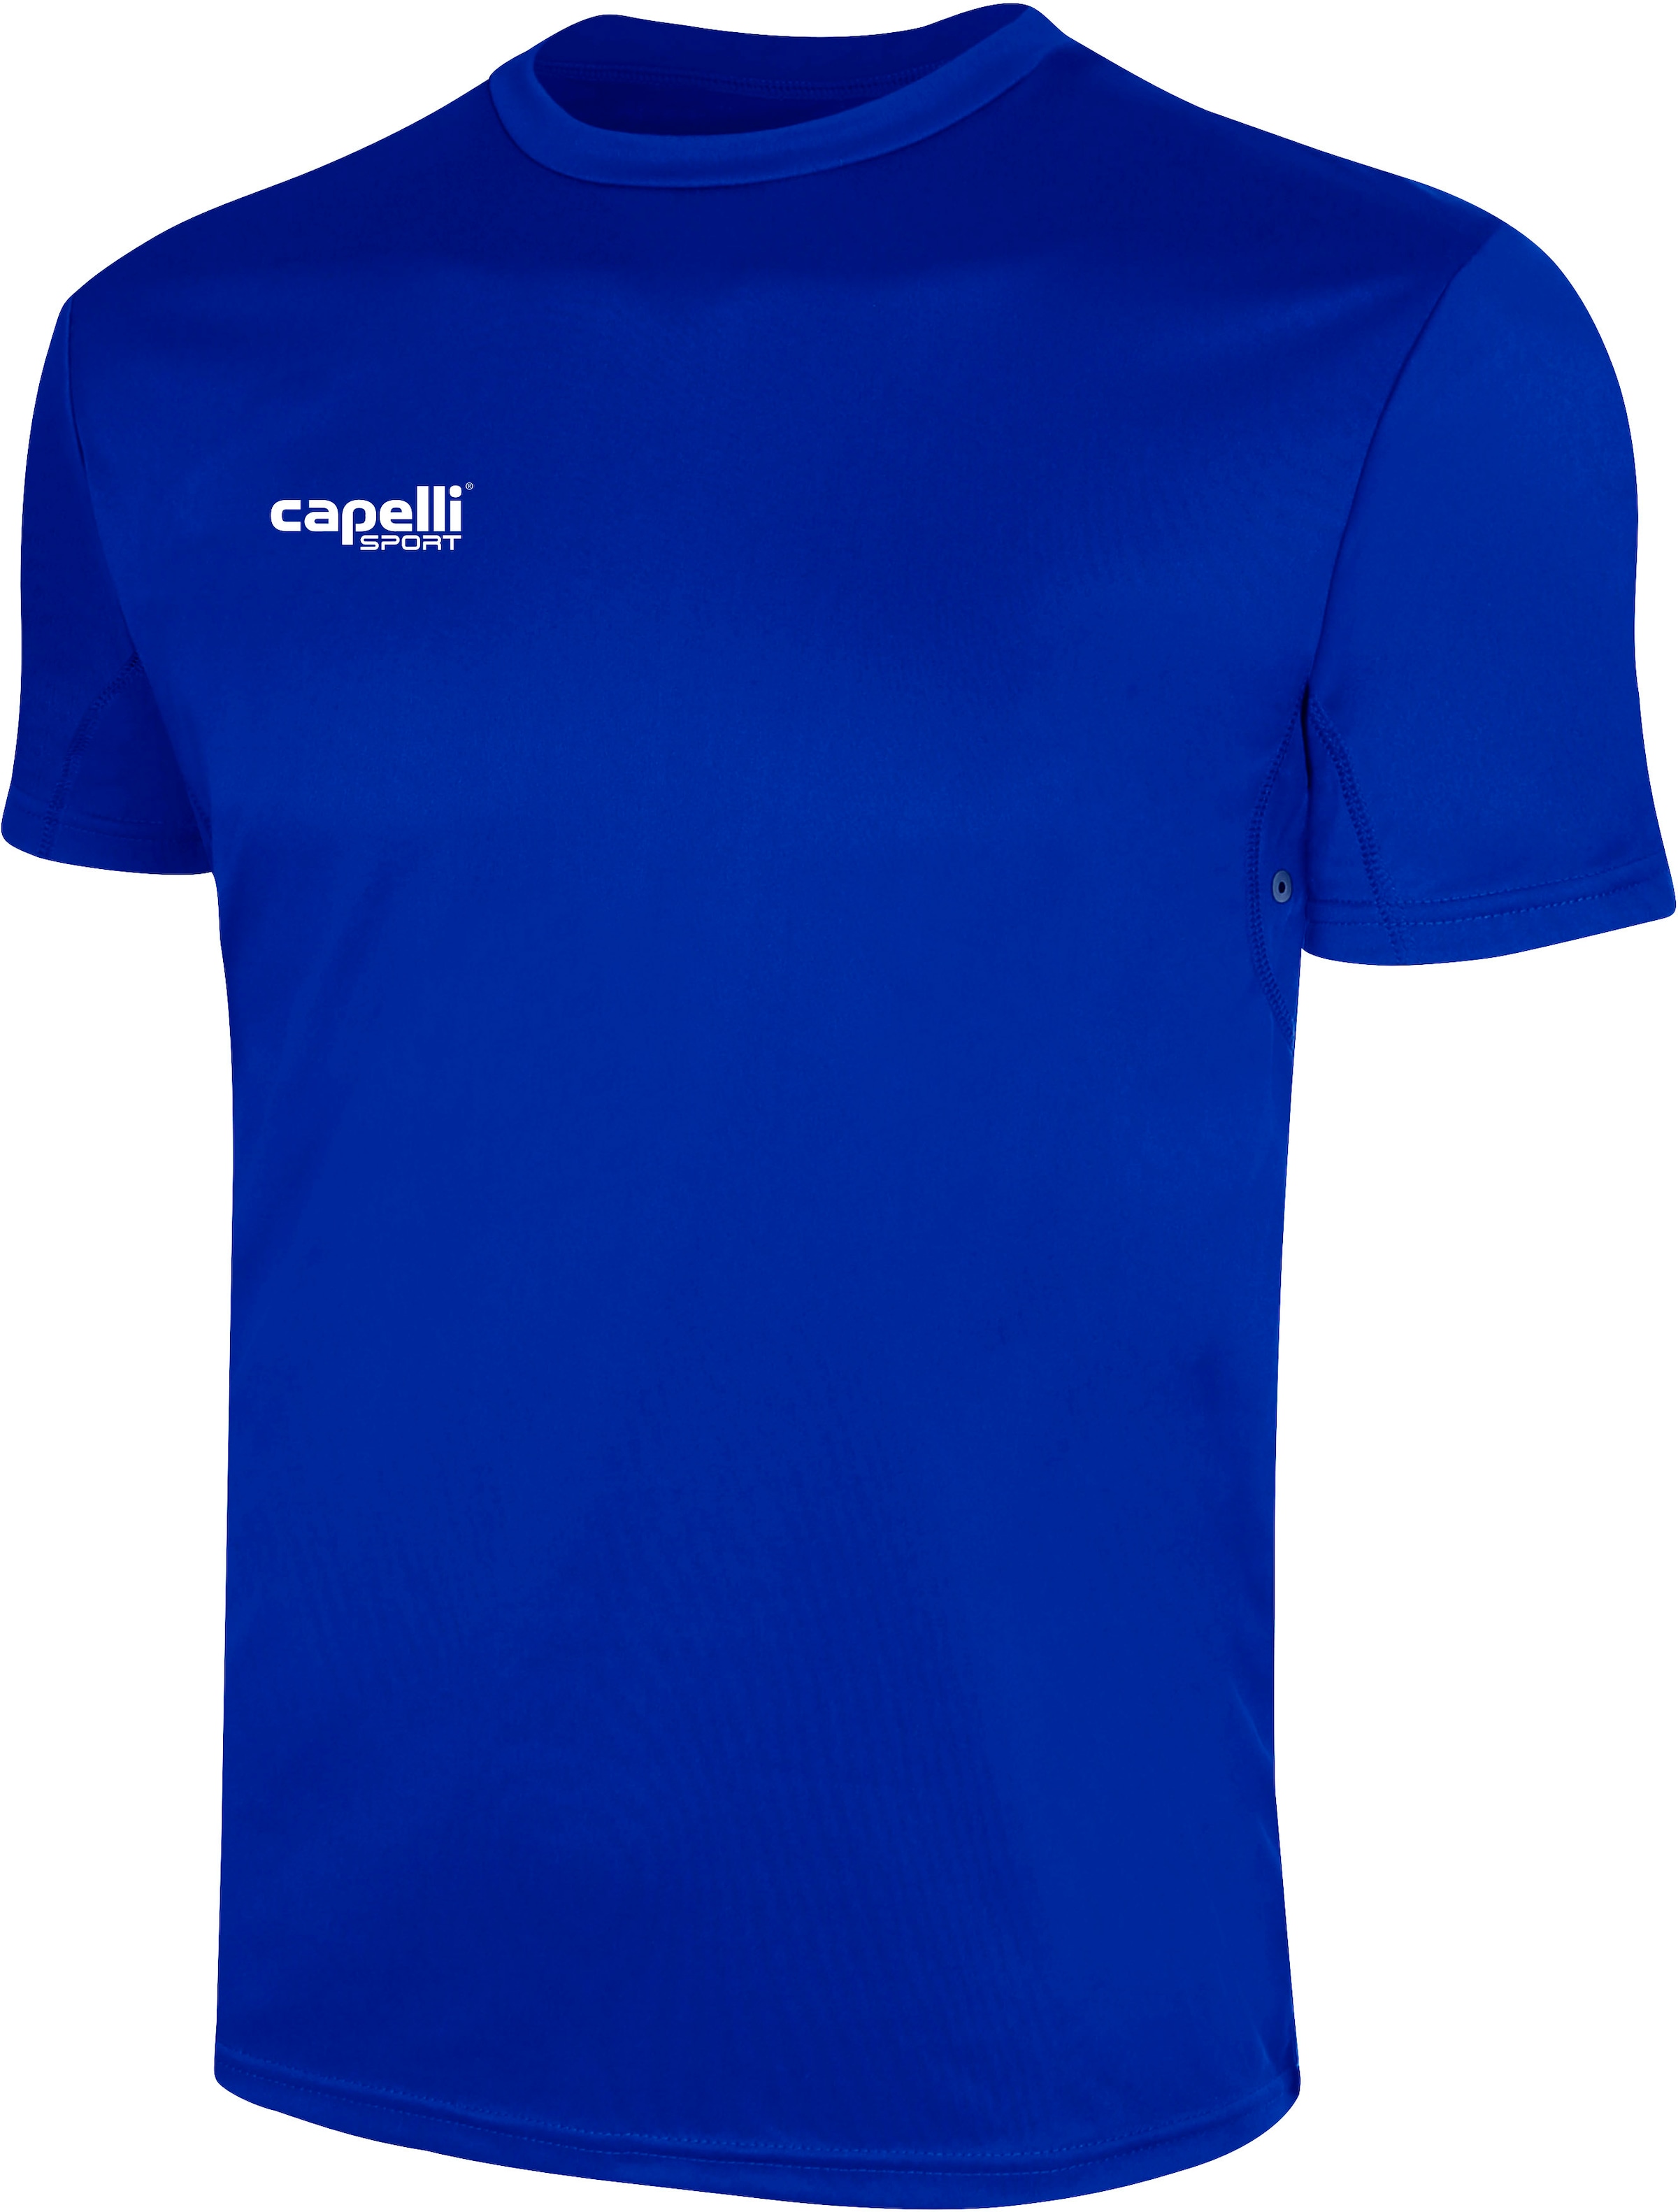 Capelli Sport Trainingsshirt, mit Belüftungslöchern unter den Ärmeln